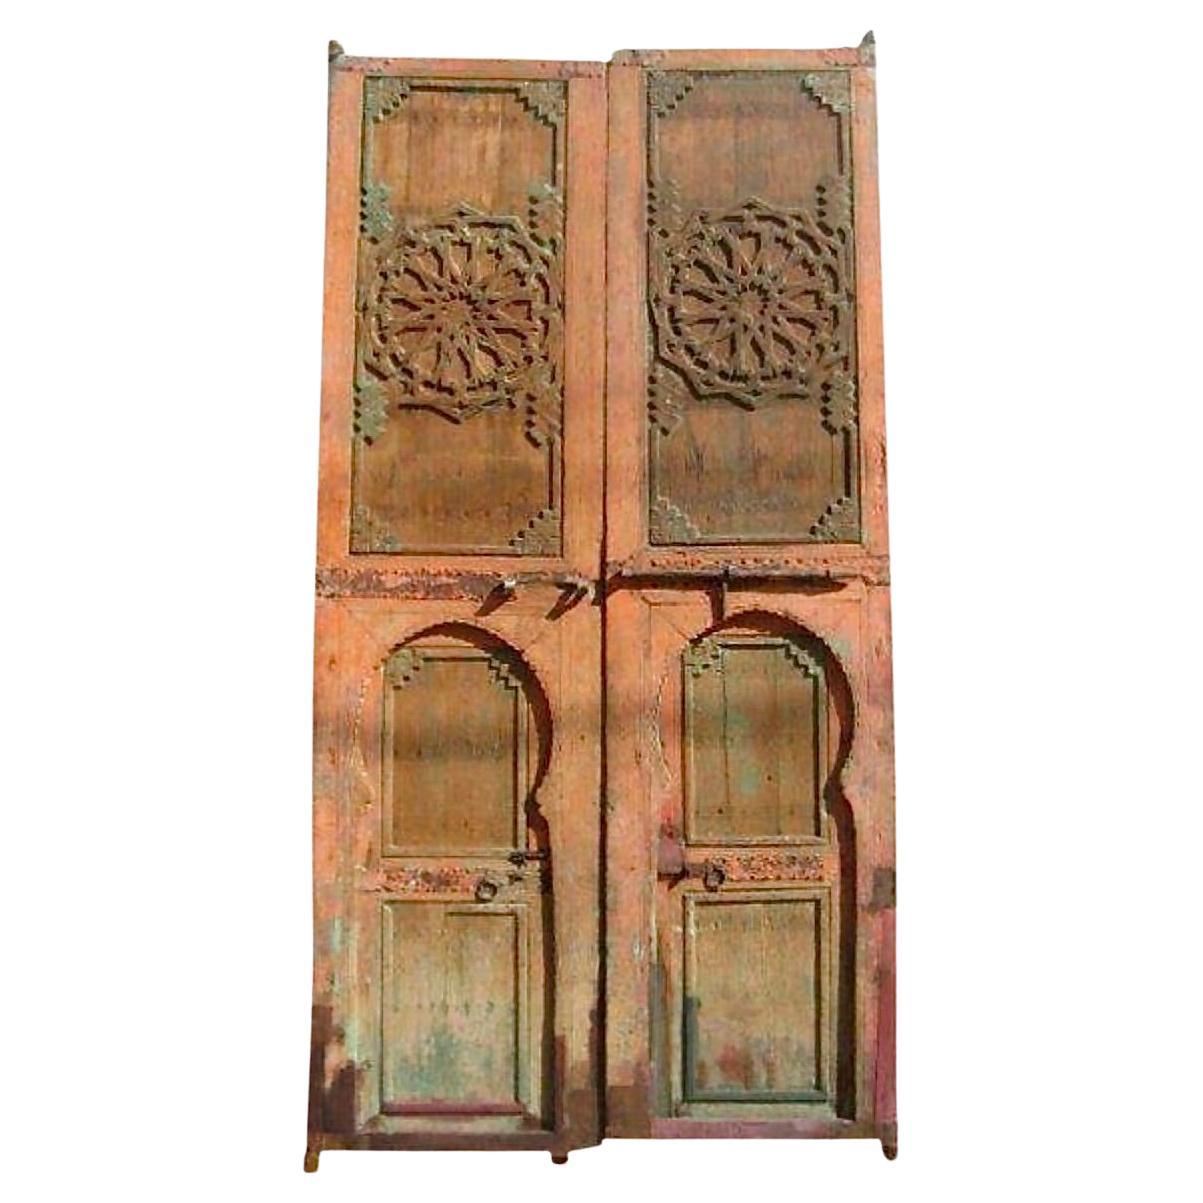 Paire de portes de riad marocain de la fin du XIXe siècle en vente